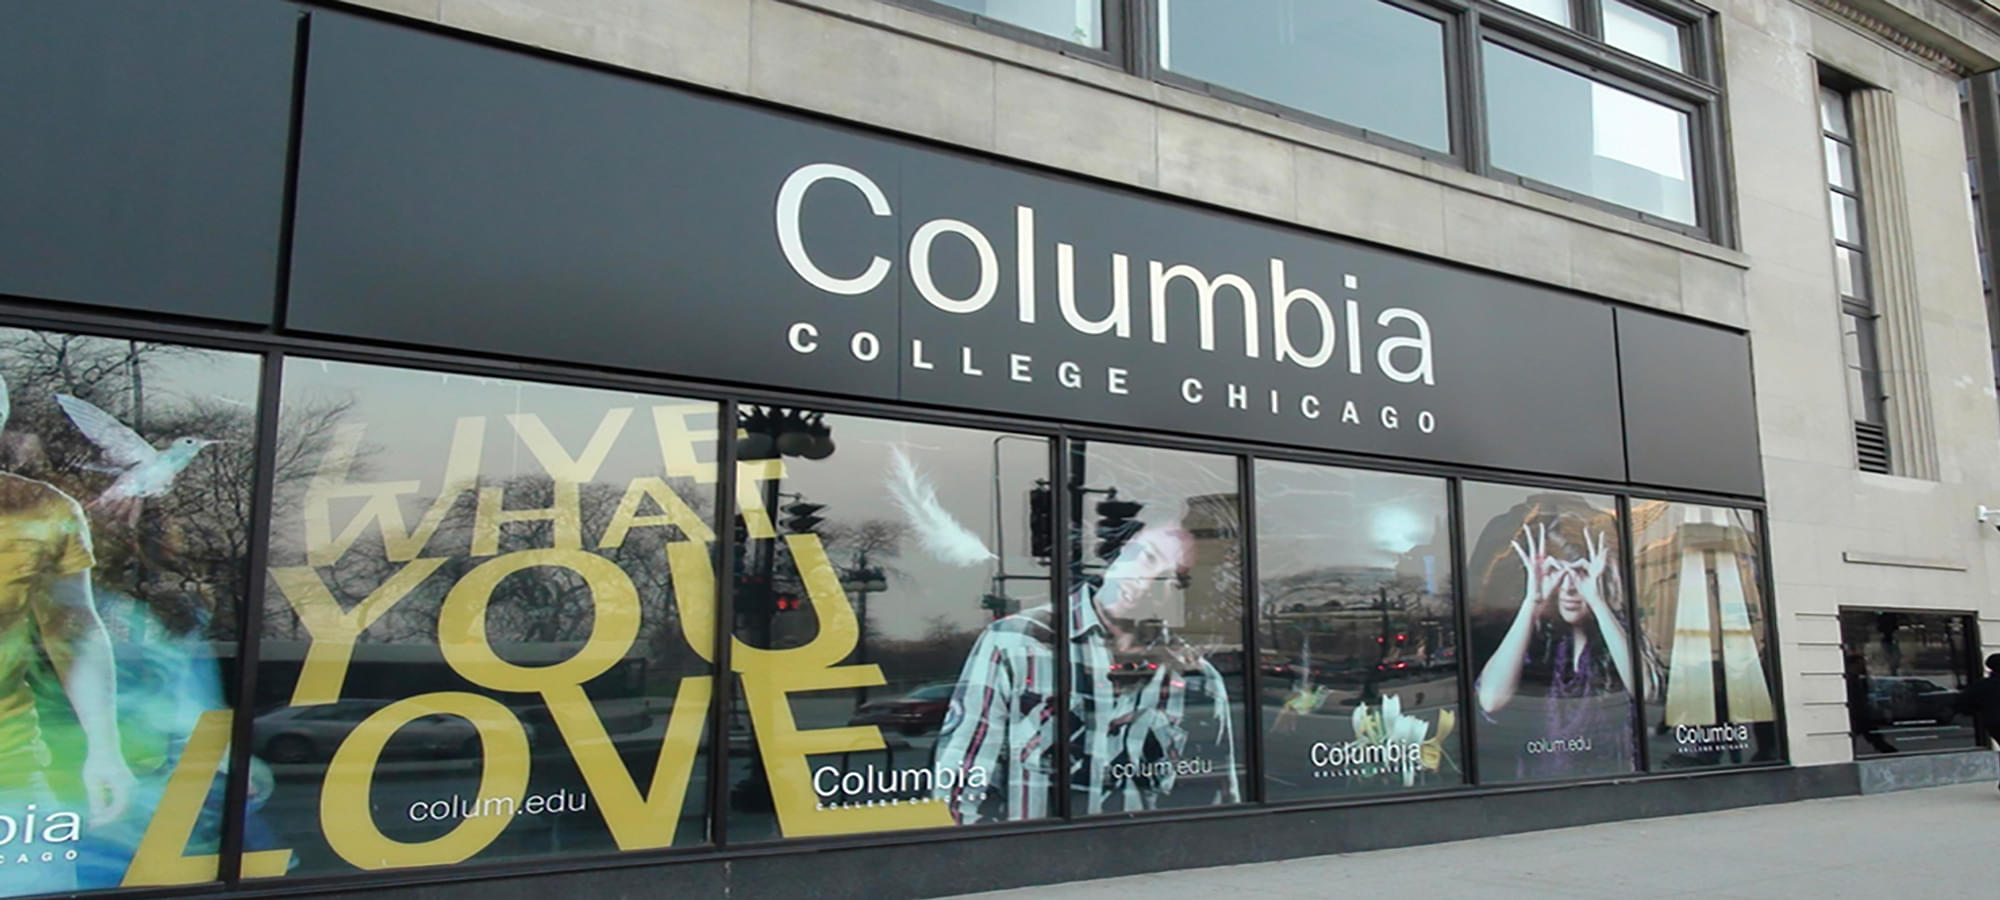 columbia-college-chicago-chicago-courses-fees-ranking-admission-criteria